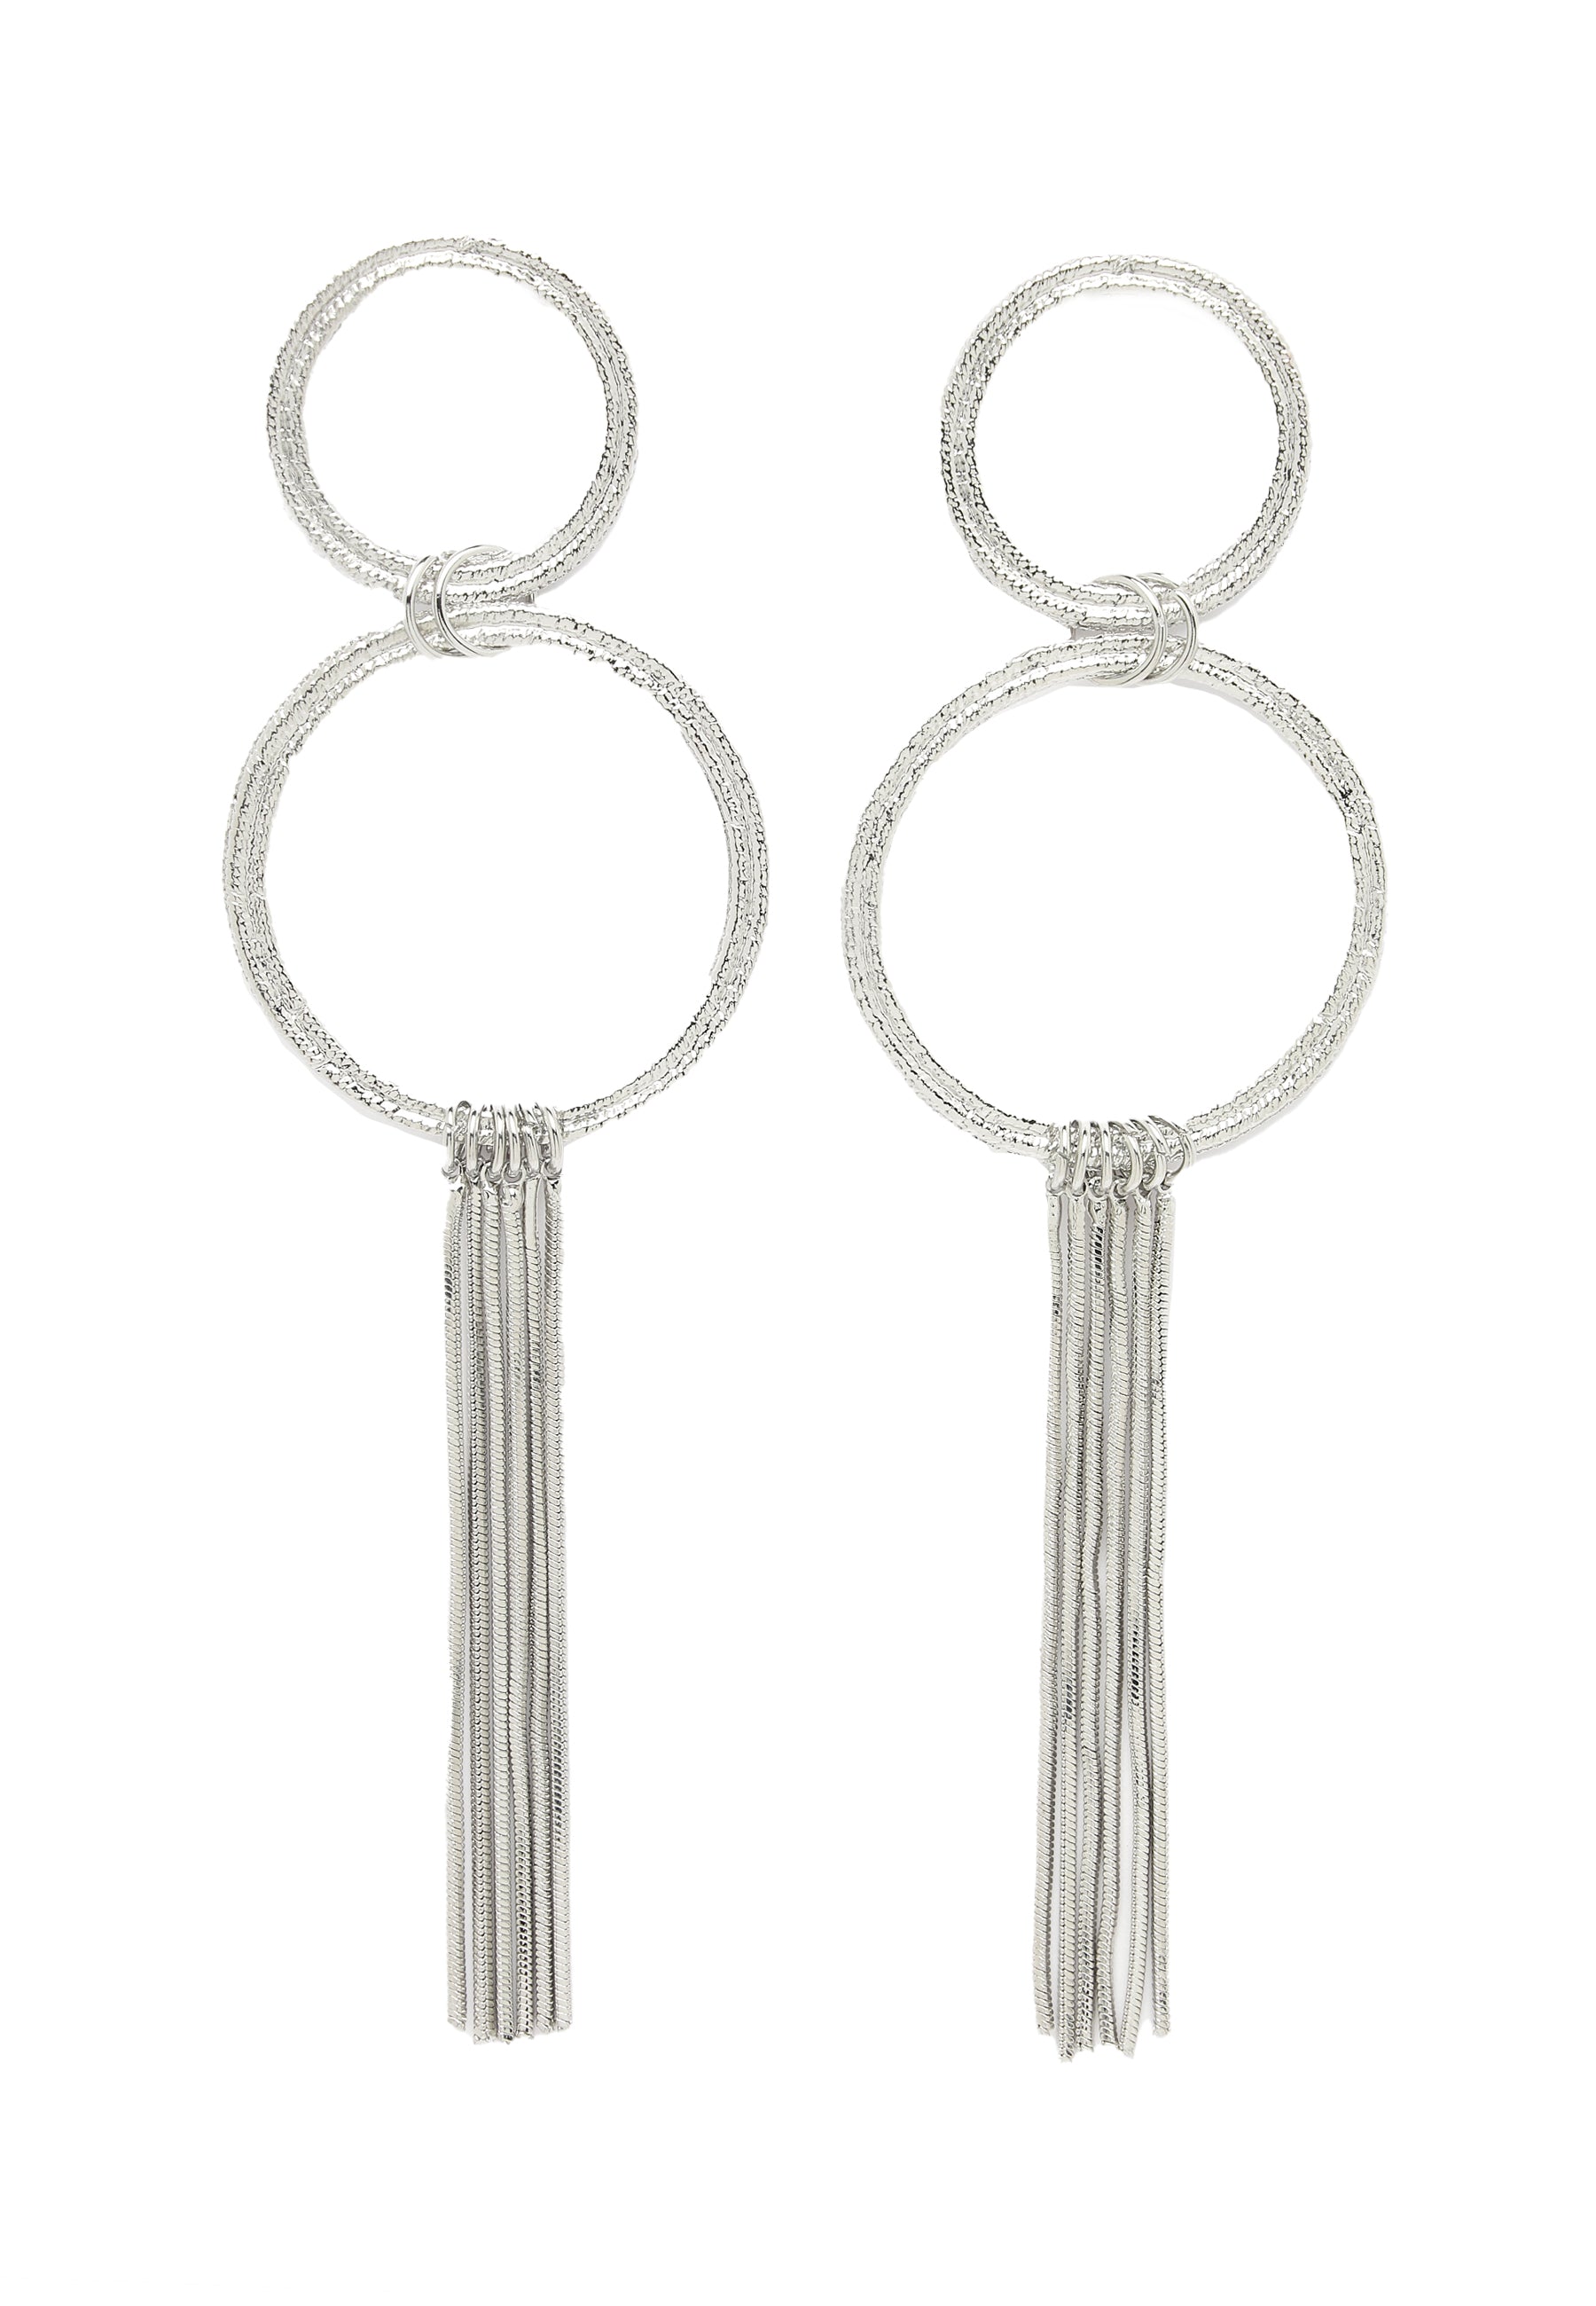 Avant-Garde Paris Elegant Circular Fringe Earrings In Silver